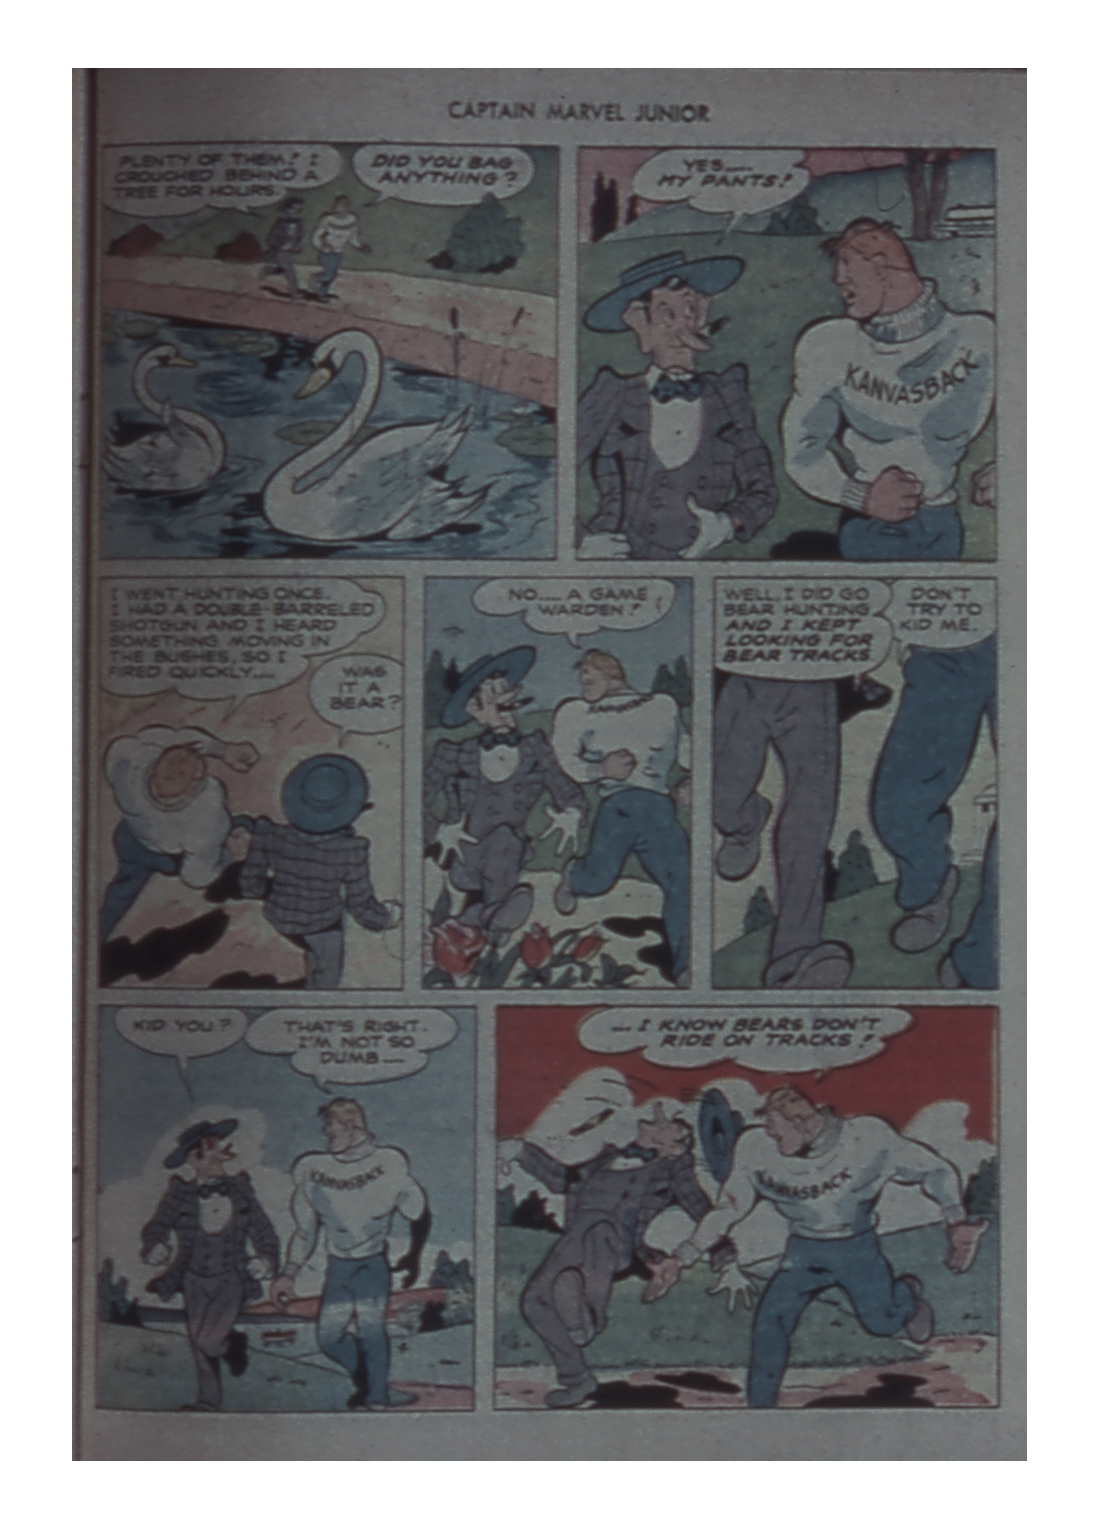 Read online Captain Marvel, Jr. comic -  Issue #63 - 37